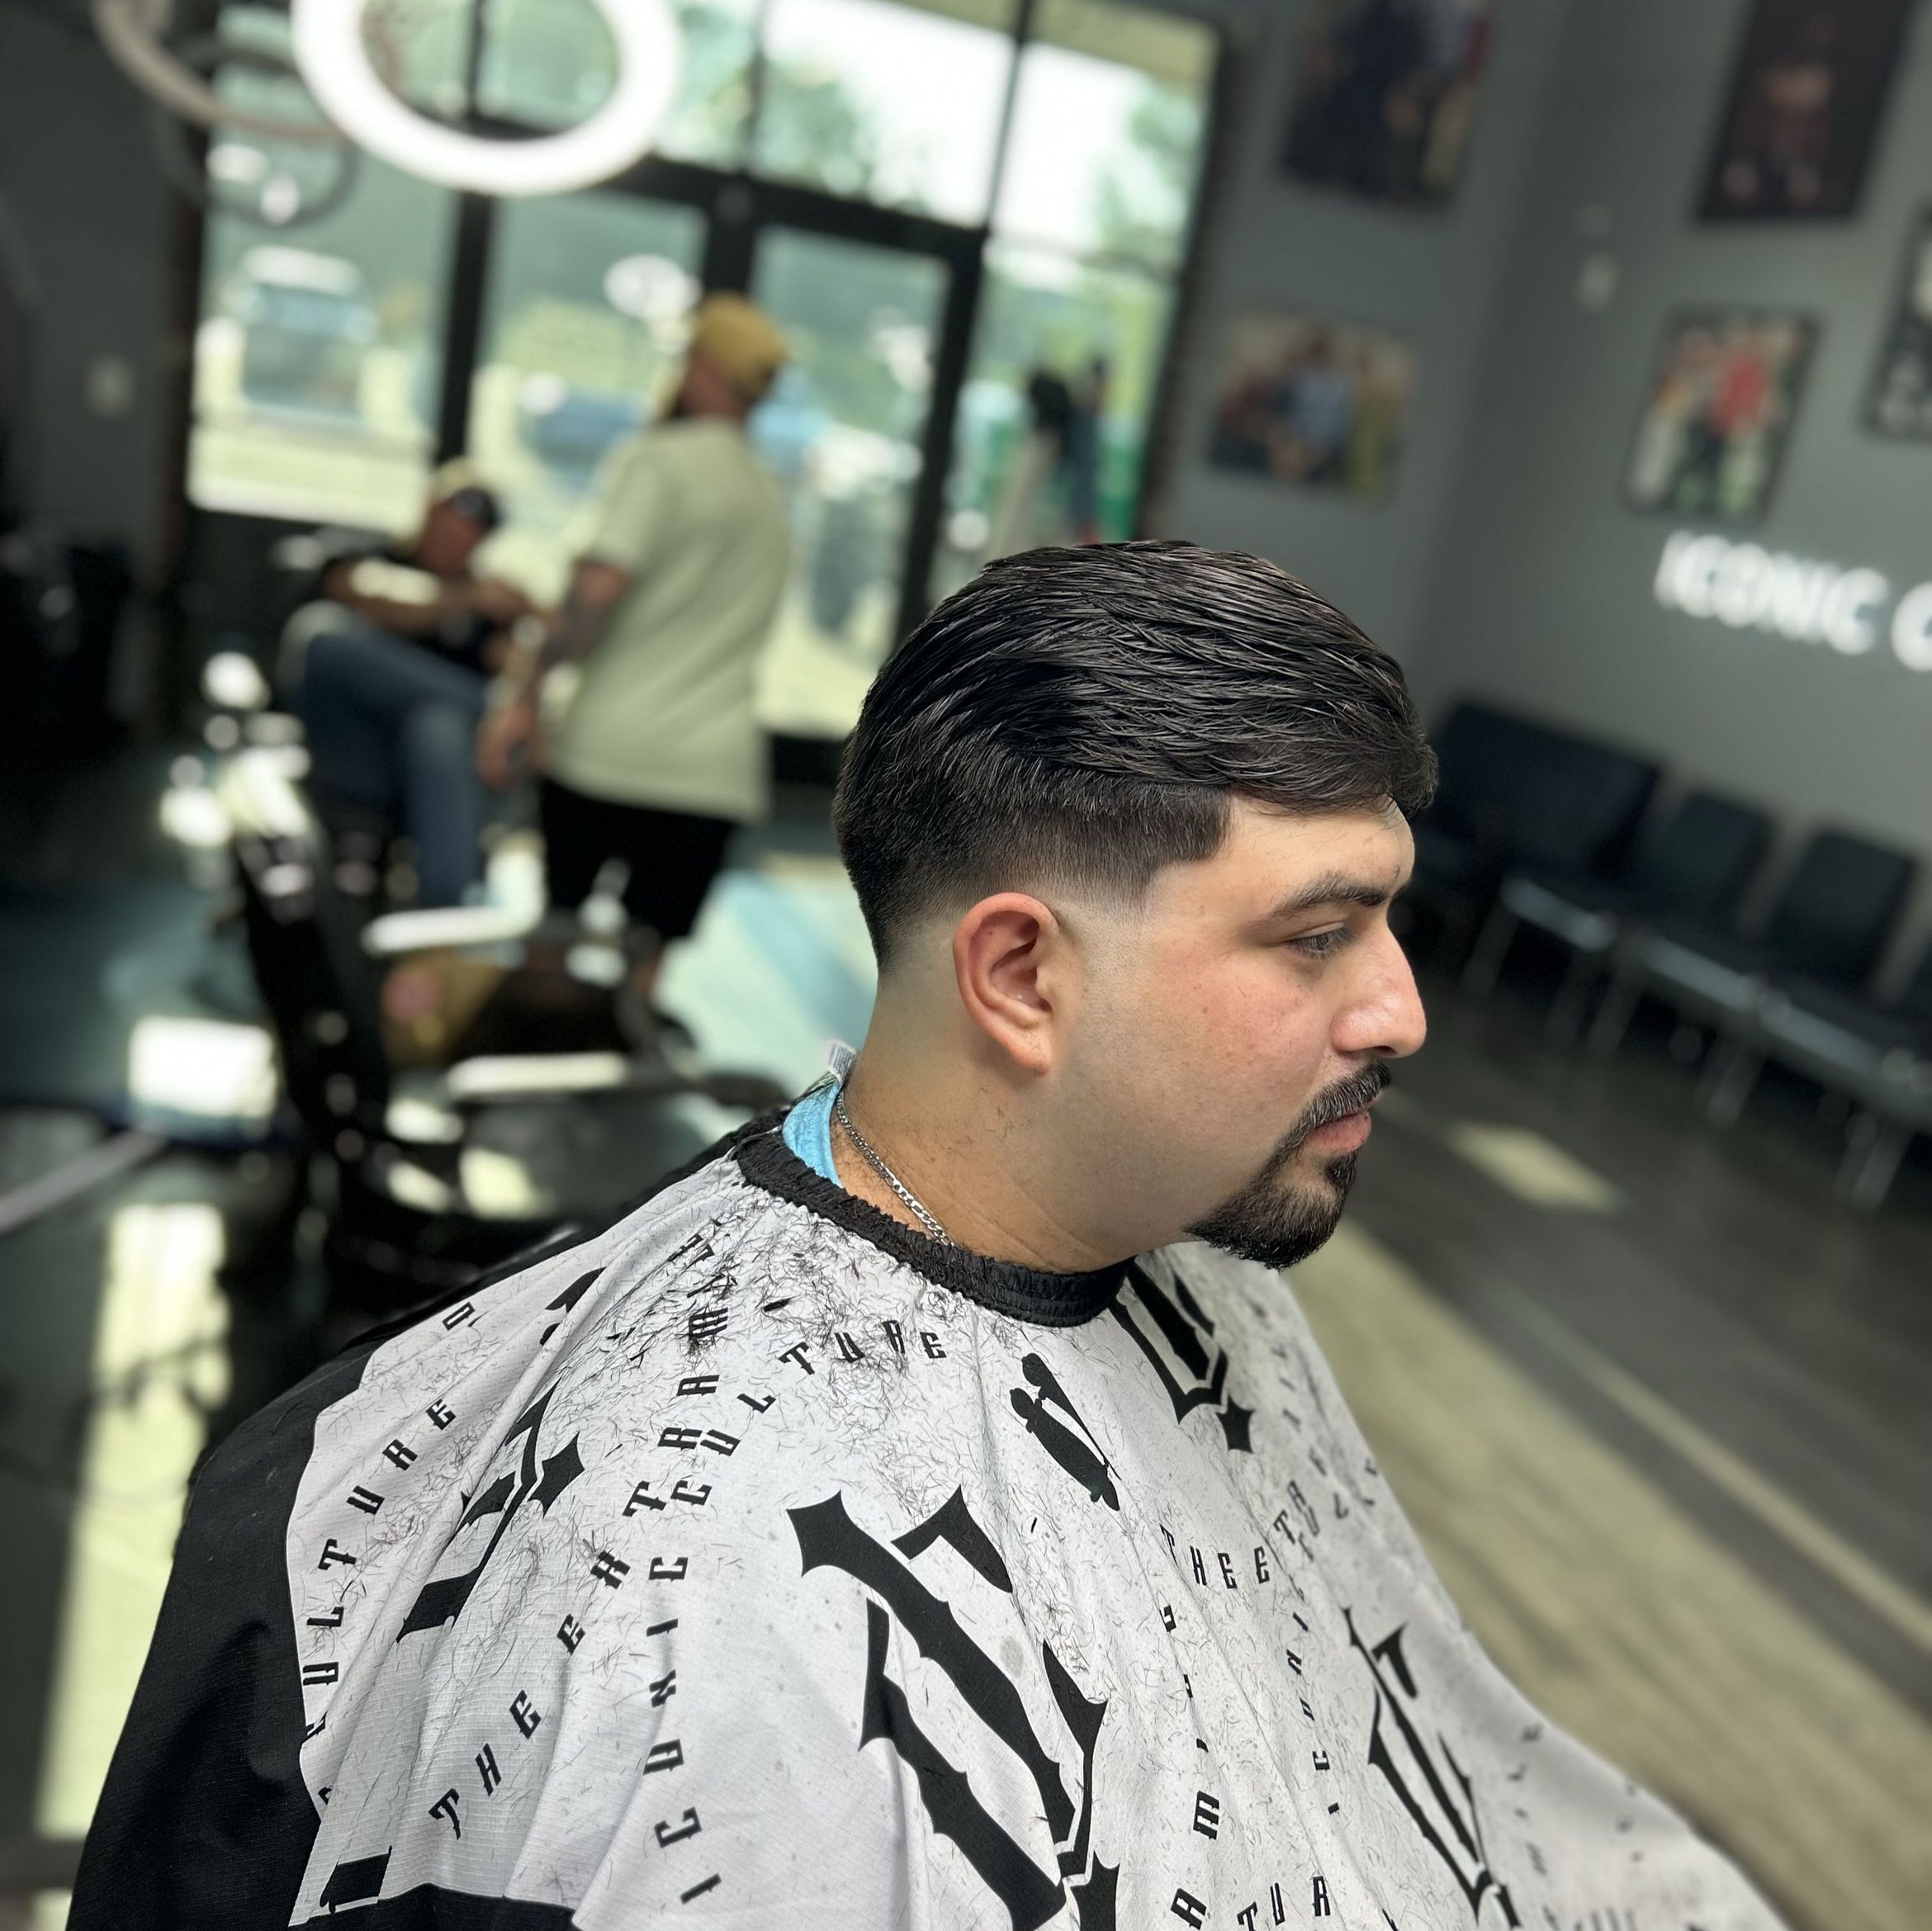 Men’s Haircut & Beard portfolio